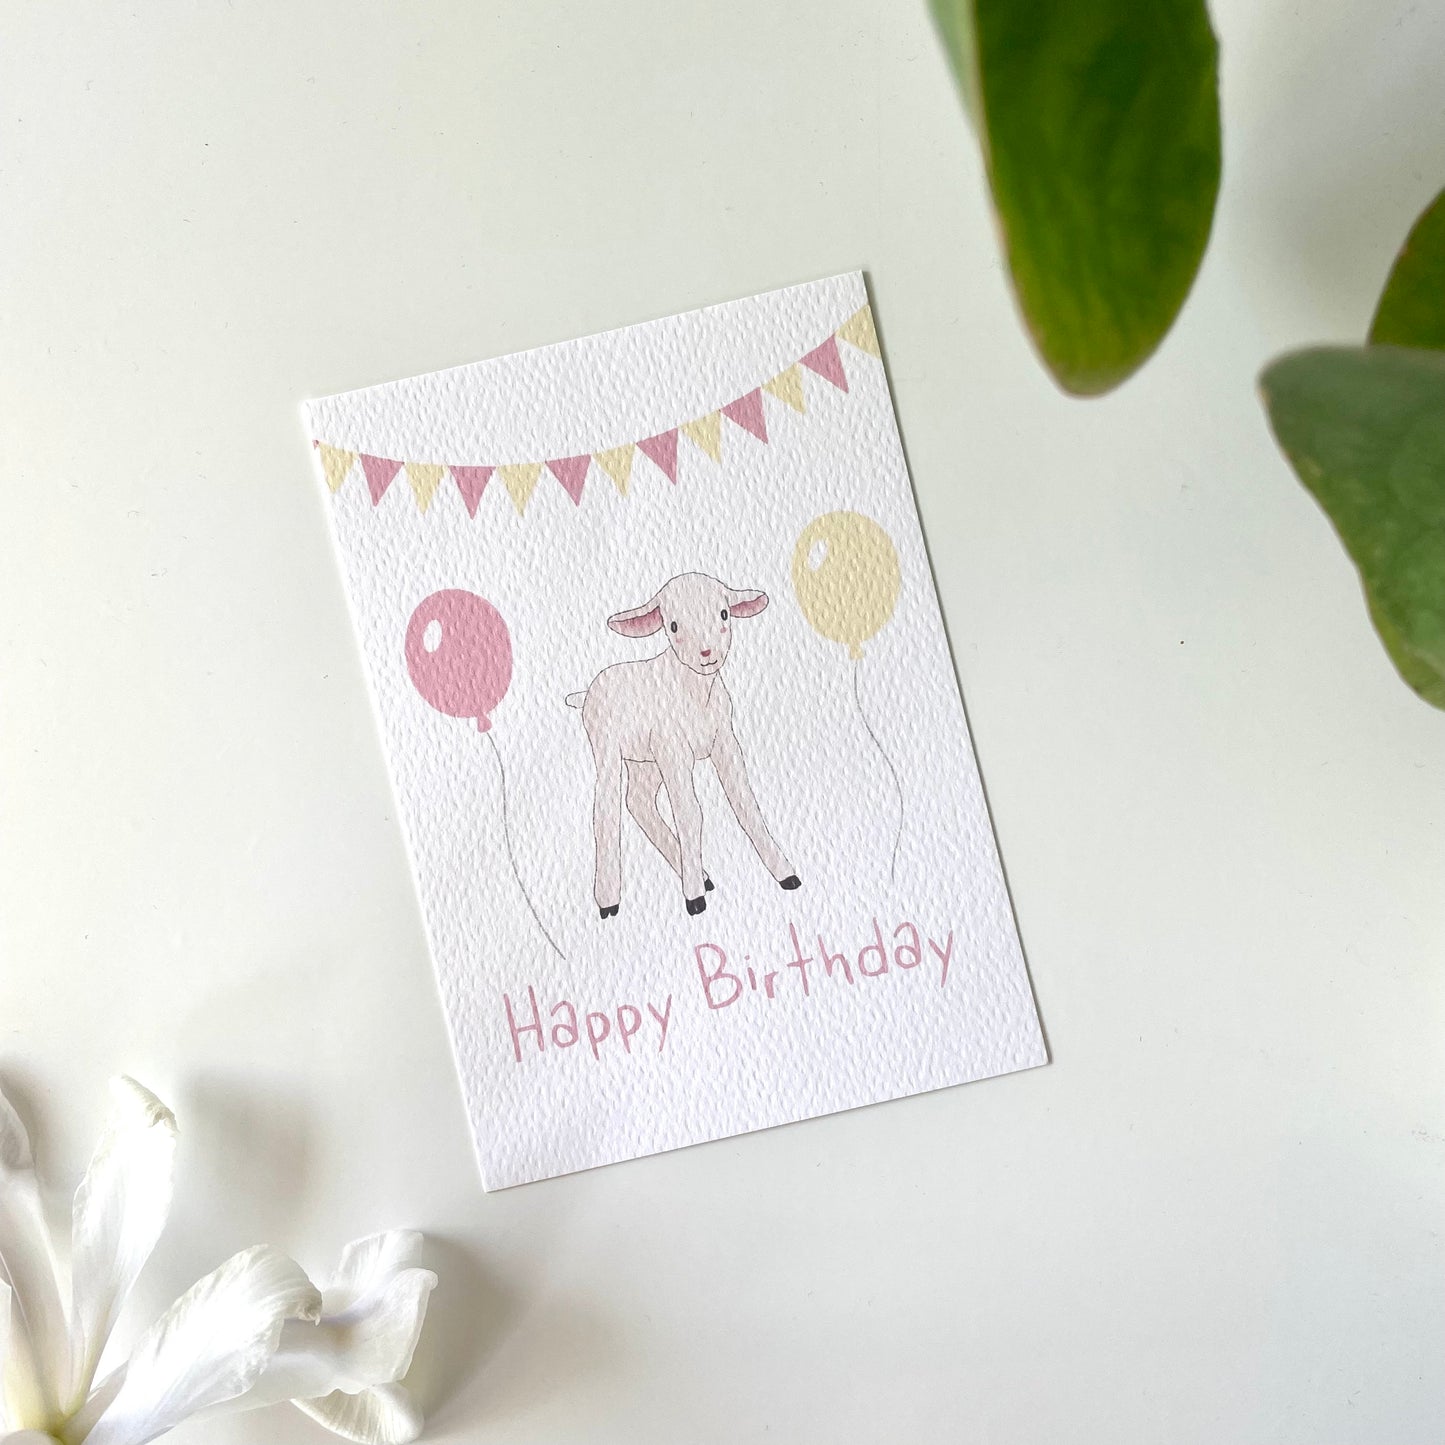 Happy birthday sheep postcard